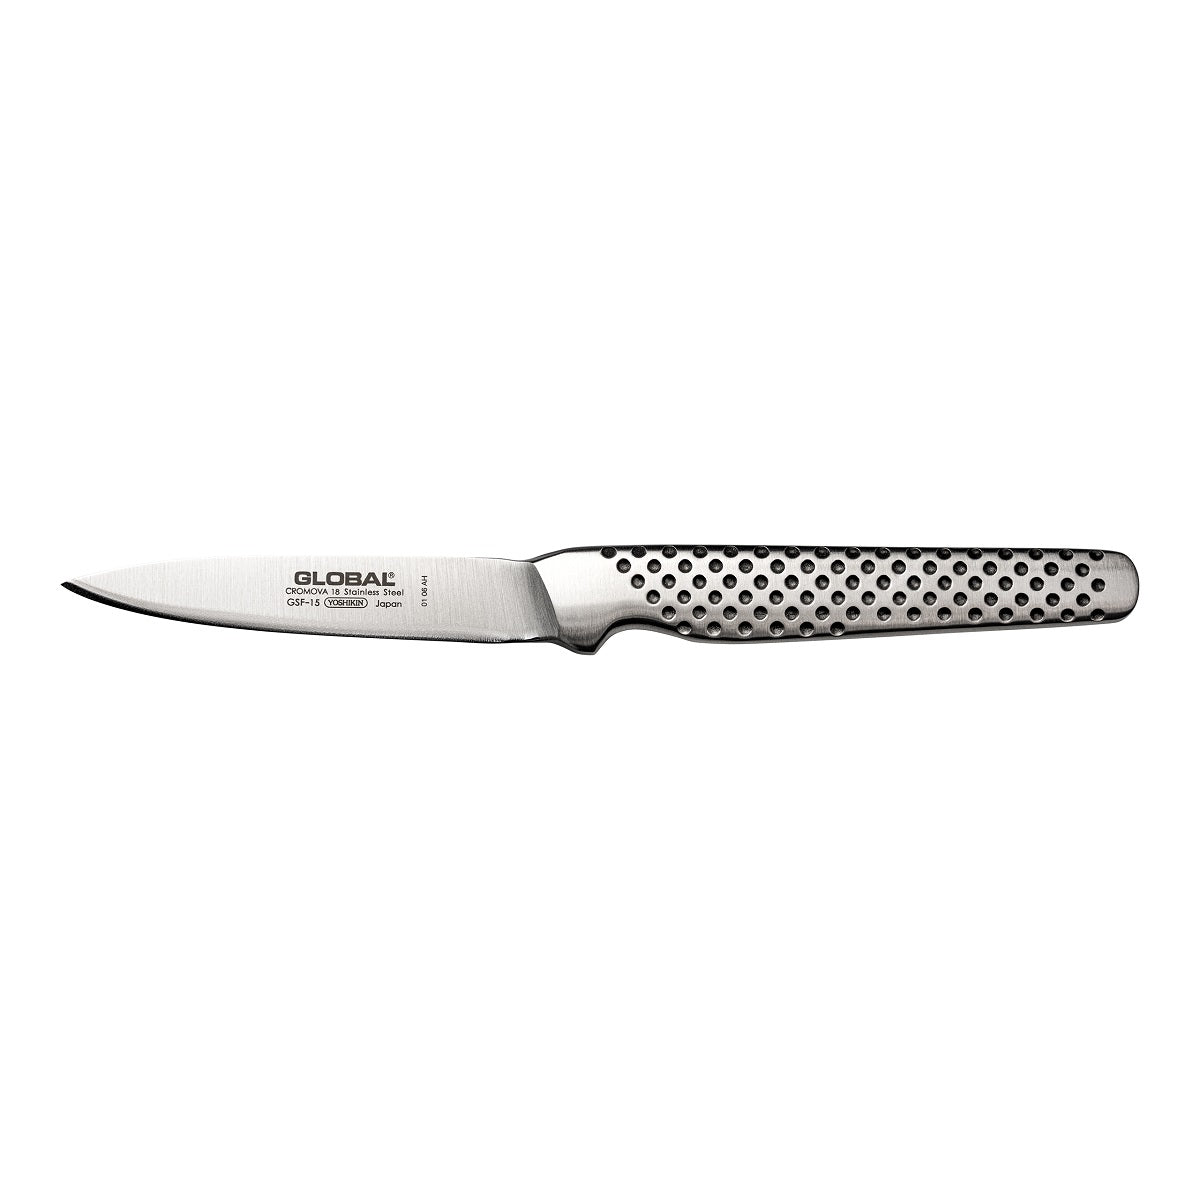 Global-GSF-15-8cm-Peeling-Knife